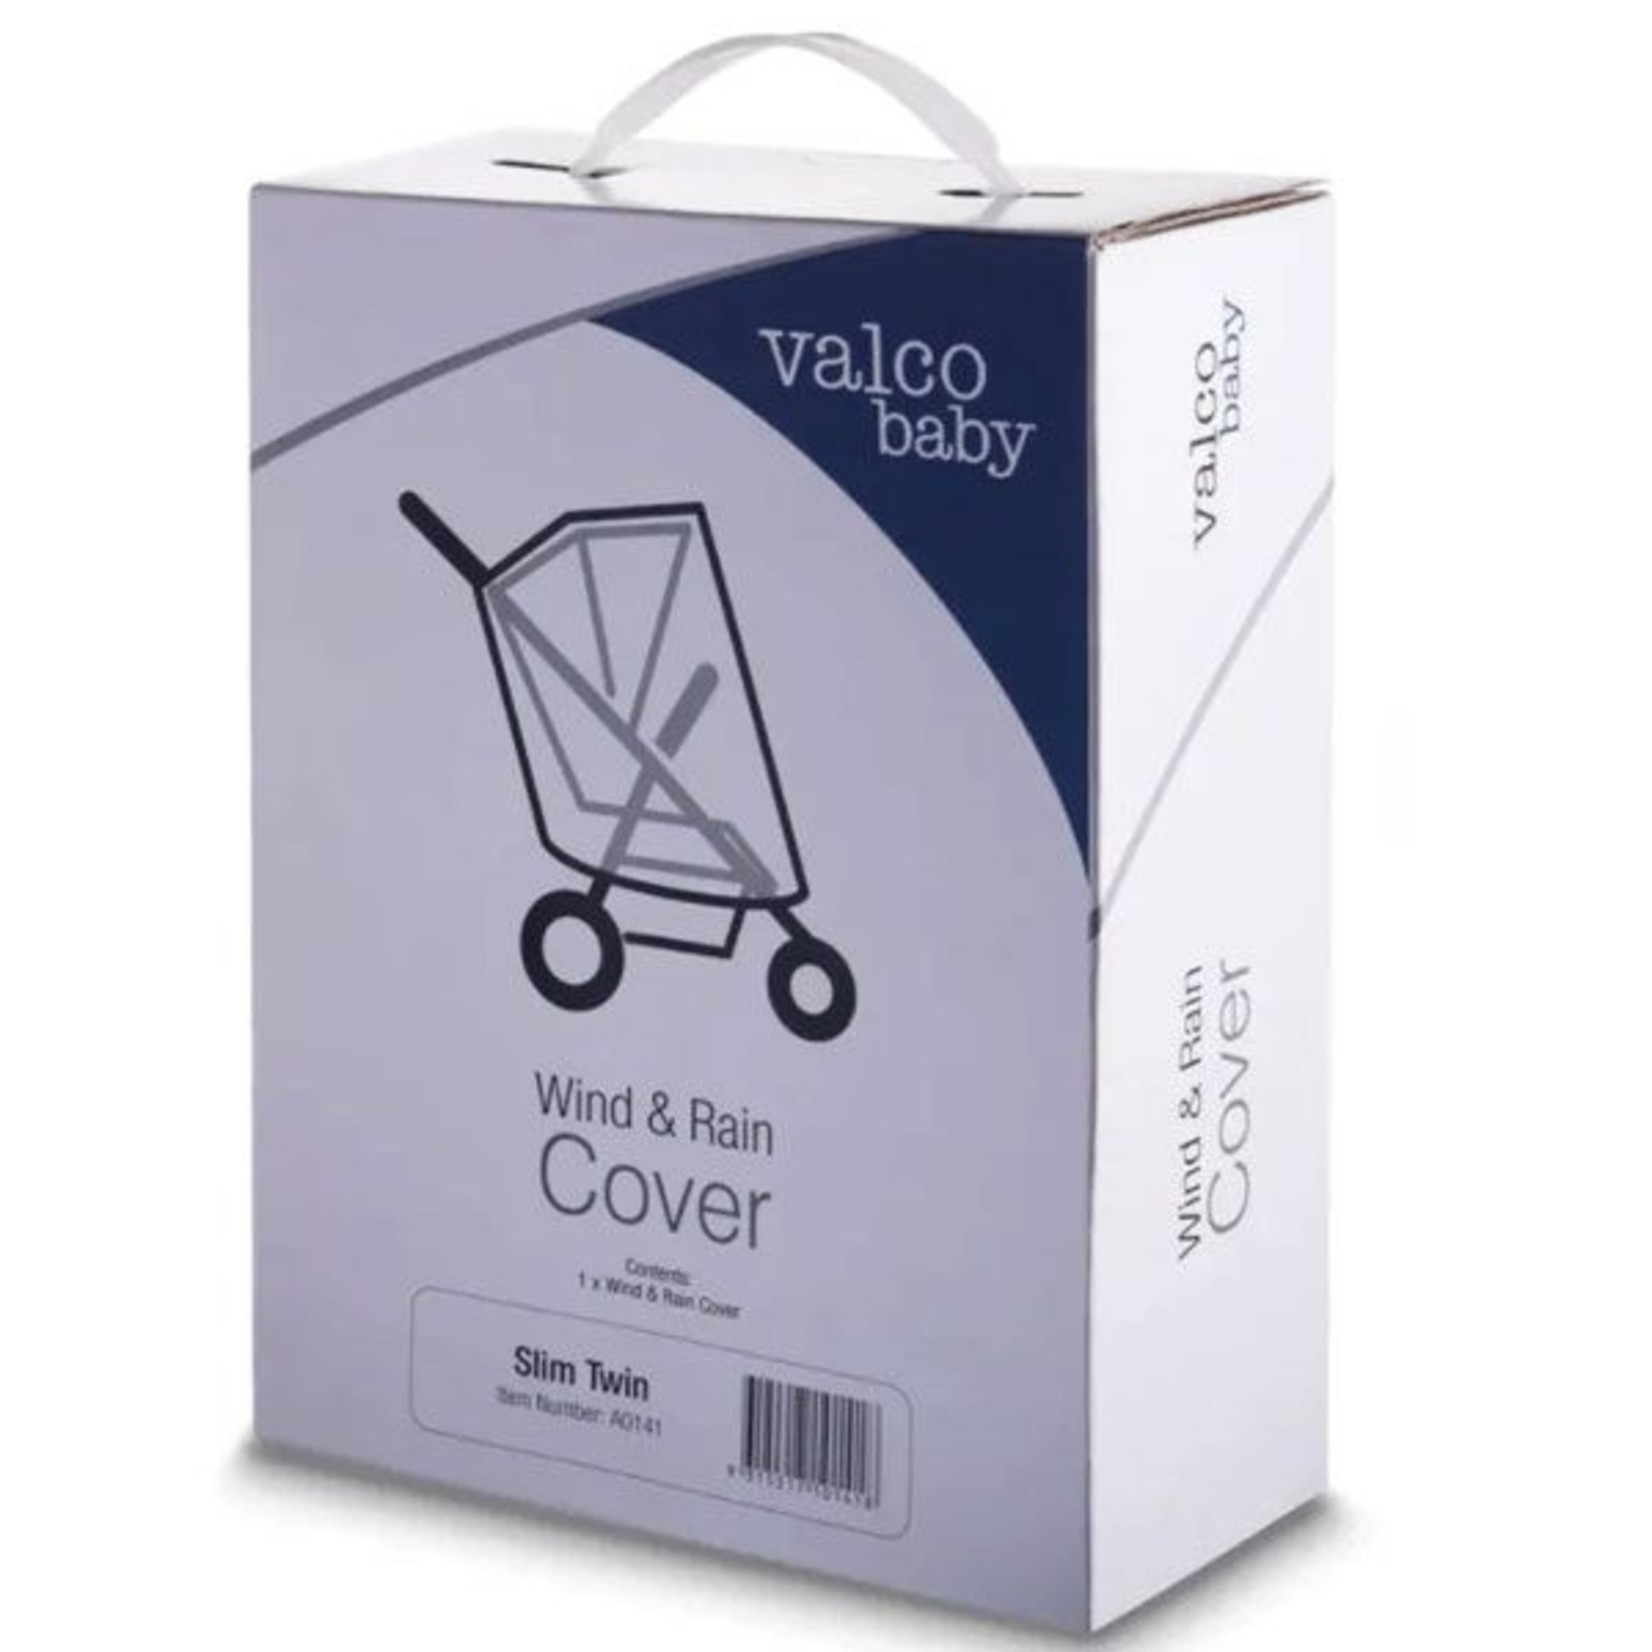 Valco Baby Wind & Rain Cover Slim Twin